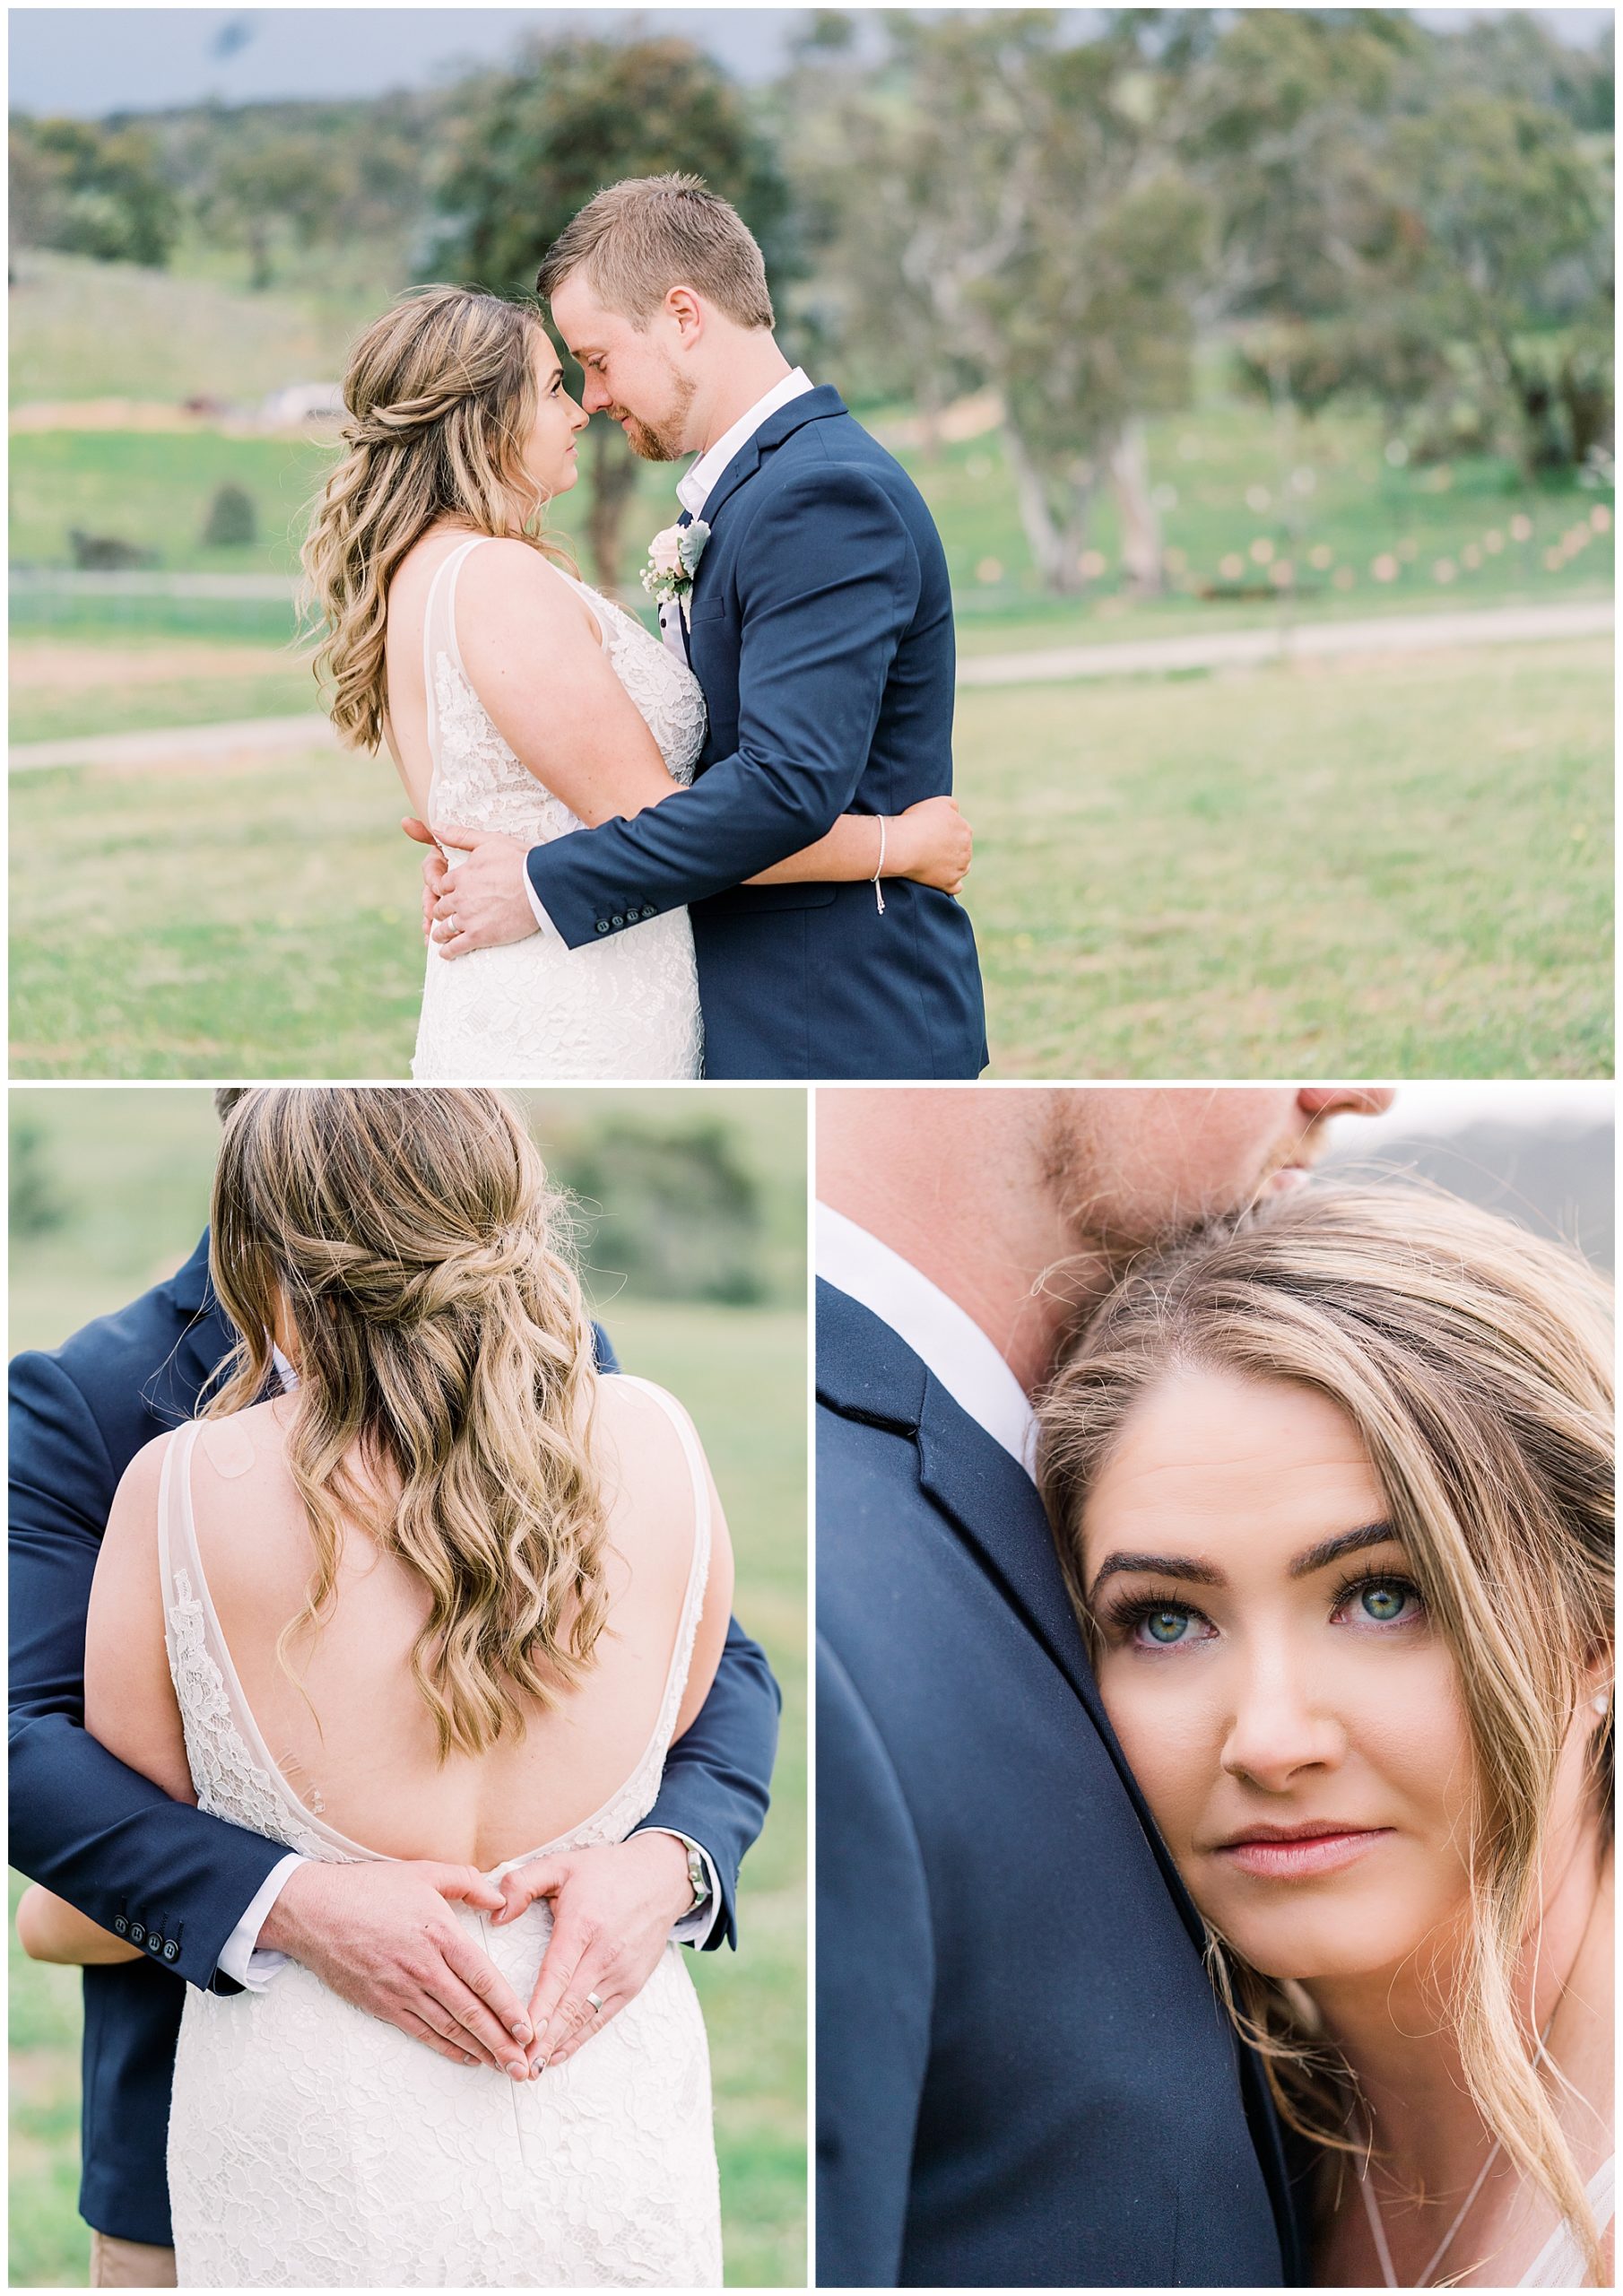 Wedding photographers Canberra | Best wedding photos